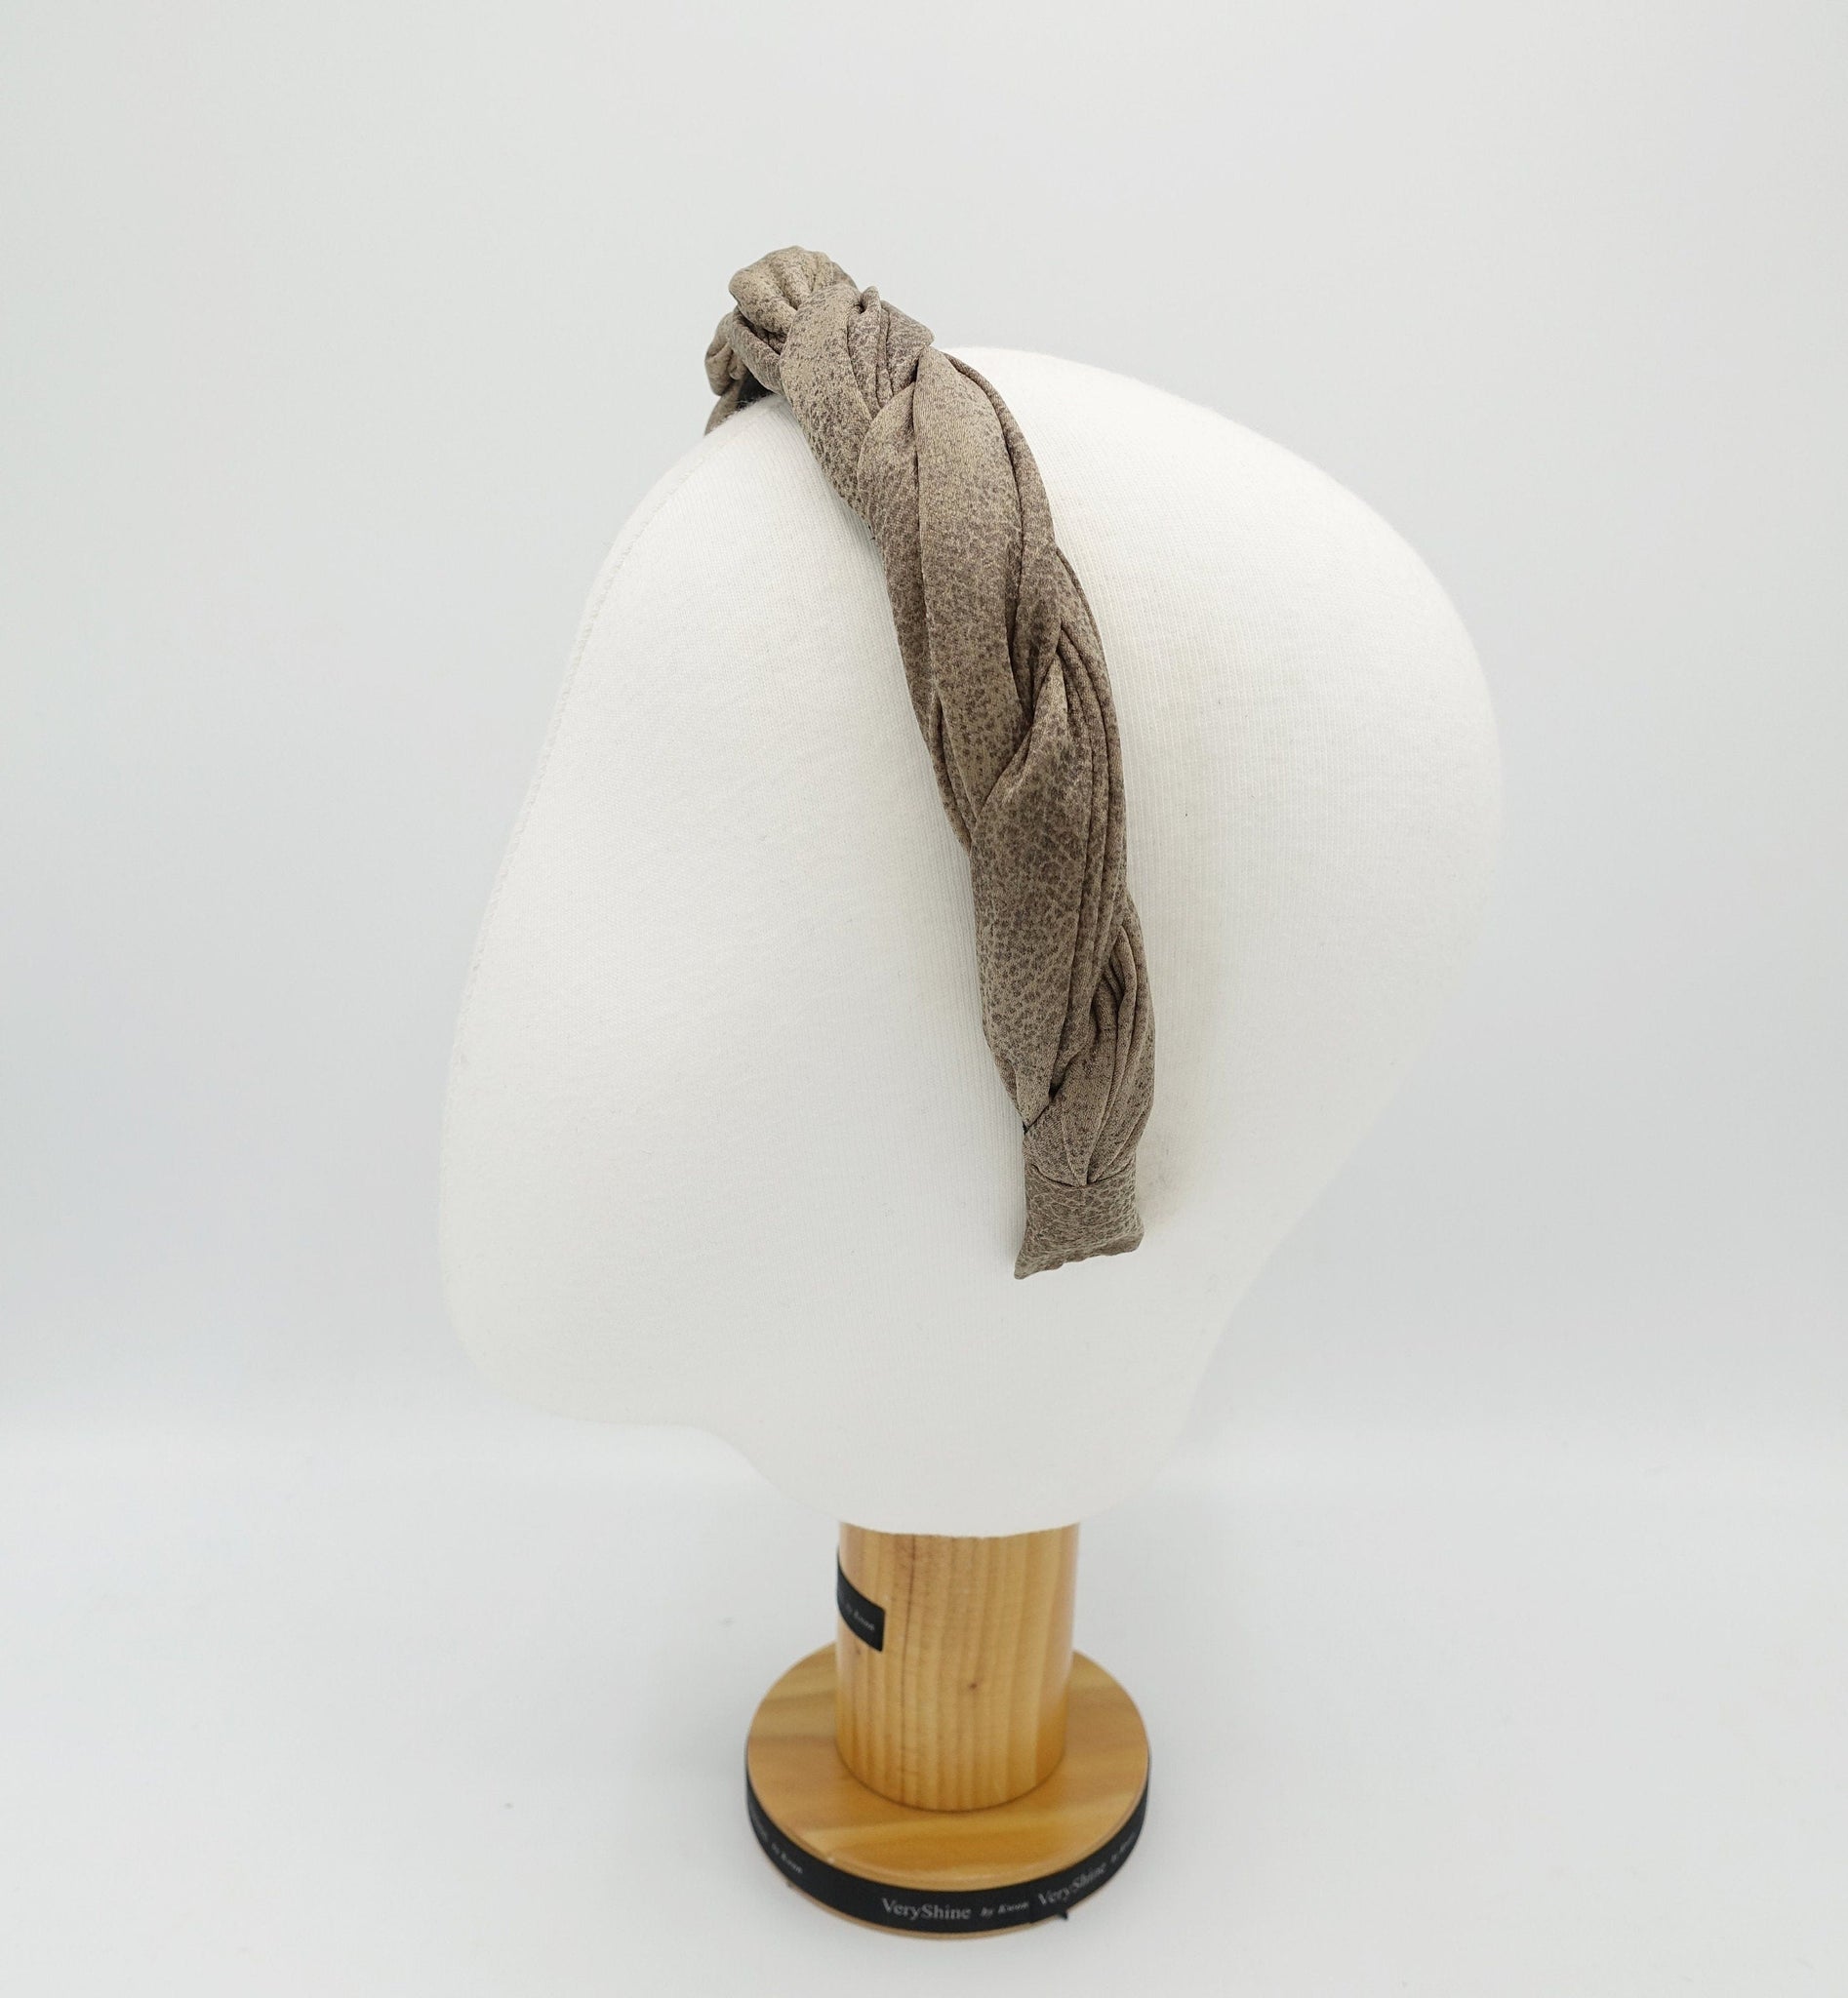 veryshine.com Headband suede cross 2 strand round braid headband Fall hair accessory for women